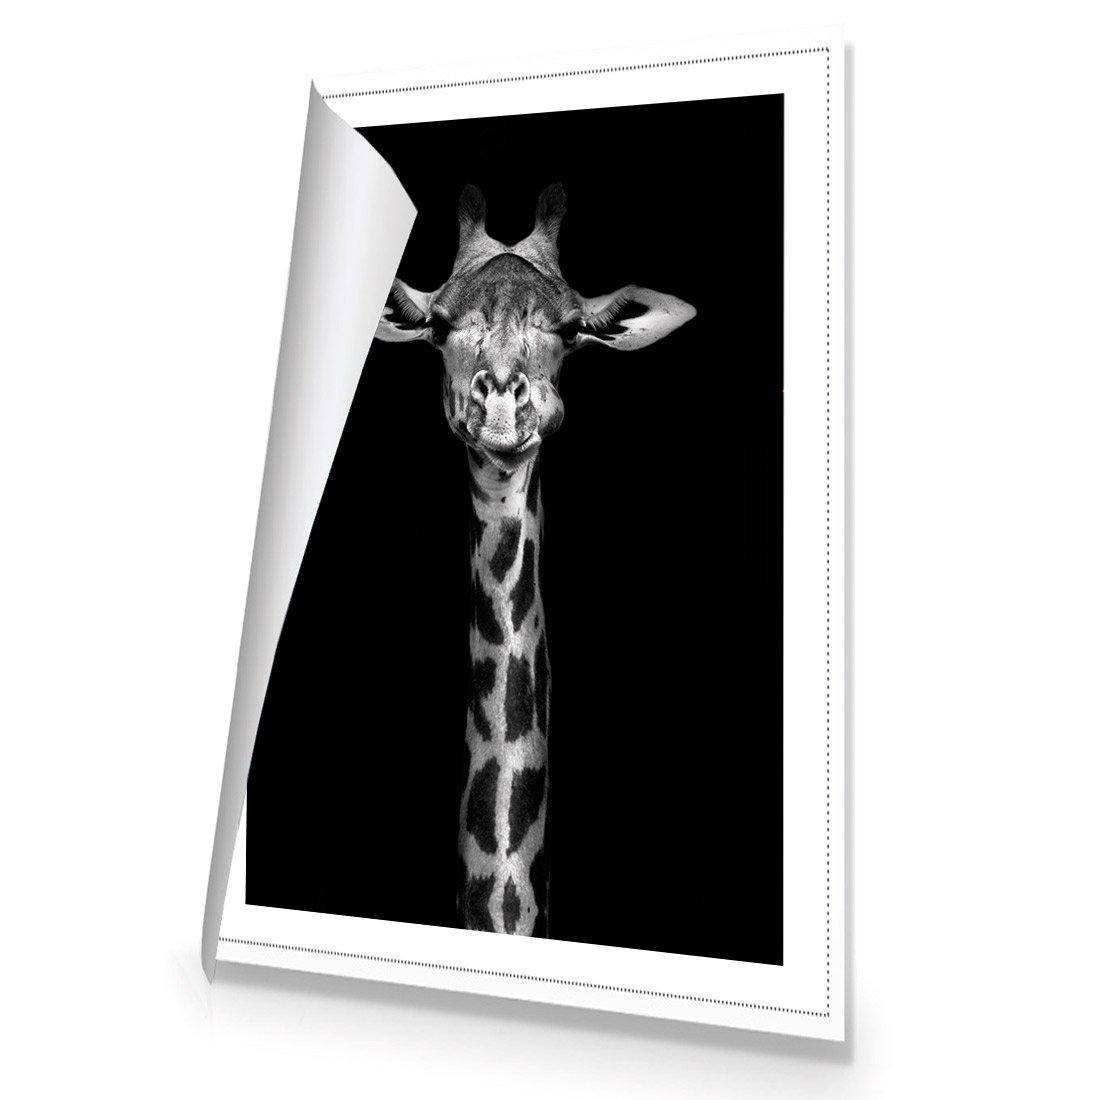 Thornycroft Giraffe Canvas Art-Canvas-Wall Art Designs-45x30cm-Rolled Canvas-Wall Art Designs